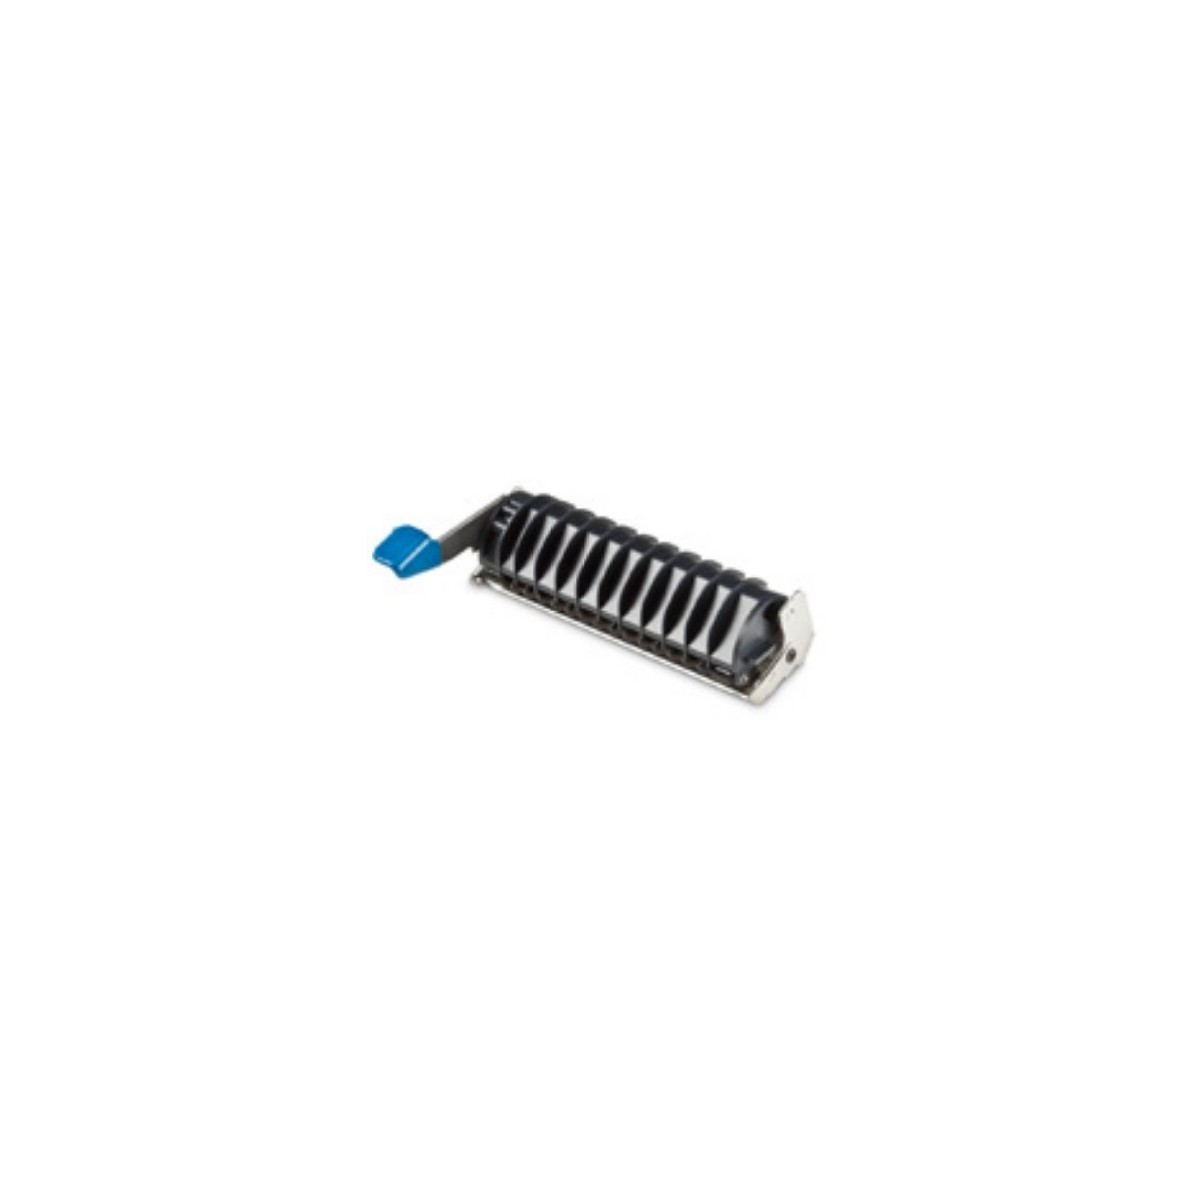 HONEYWELL 203-974-001 - Printer fuser kit - Black,Blue,White - Intermec - PM43/PM43c - 1 pc(s)